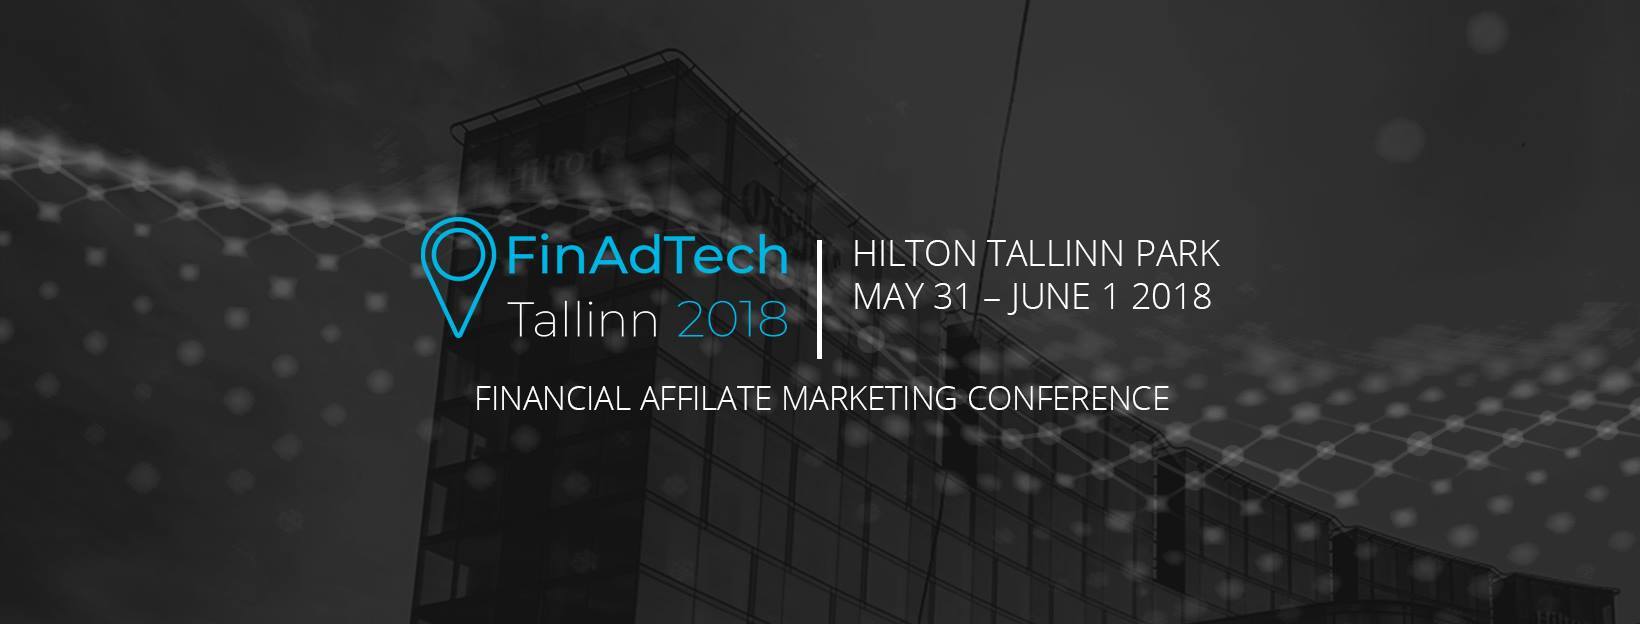 Konferencja FinAdTech już 31 maja w Tallinie!